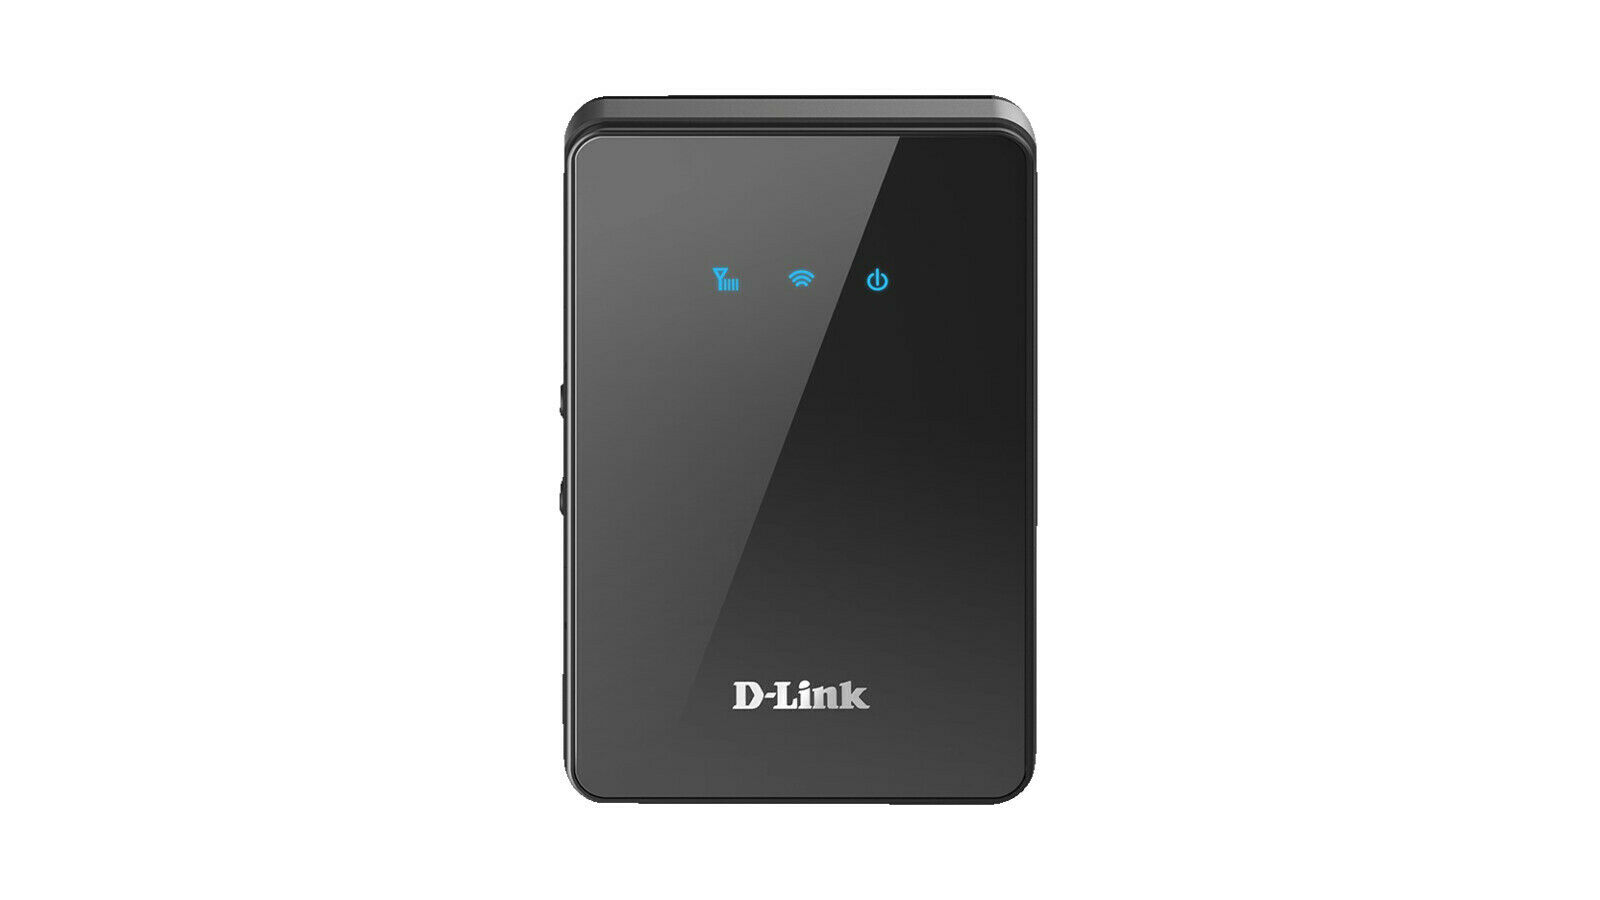 D-link 4G LTE Mobile WiFi Hotspot 150 Mbps (EU)